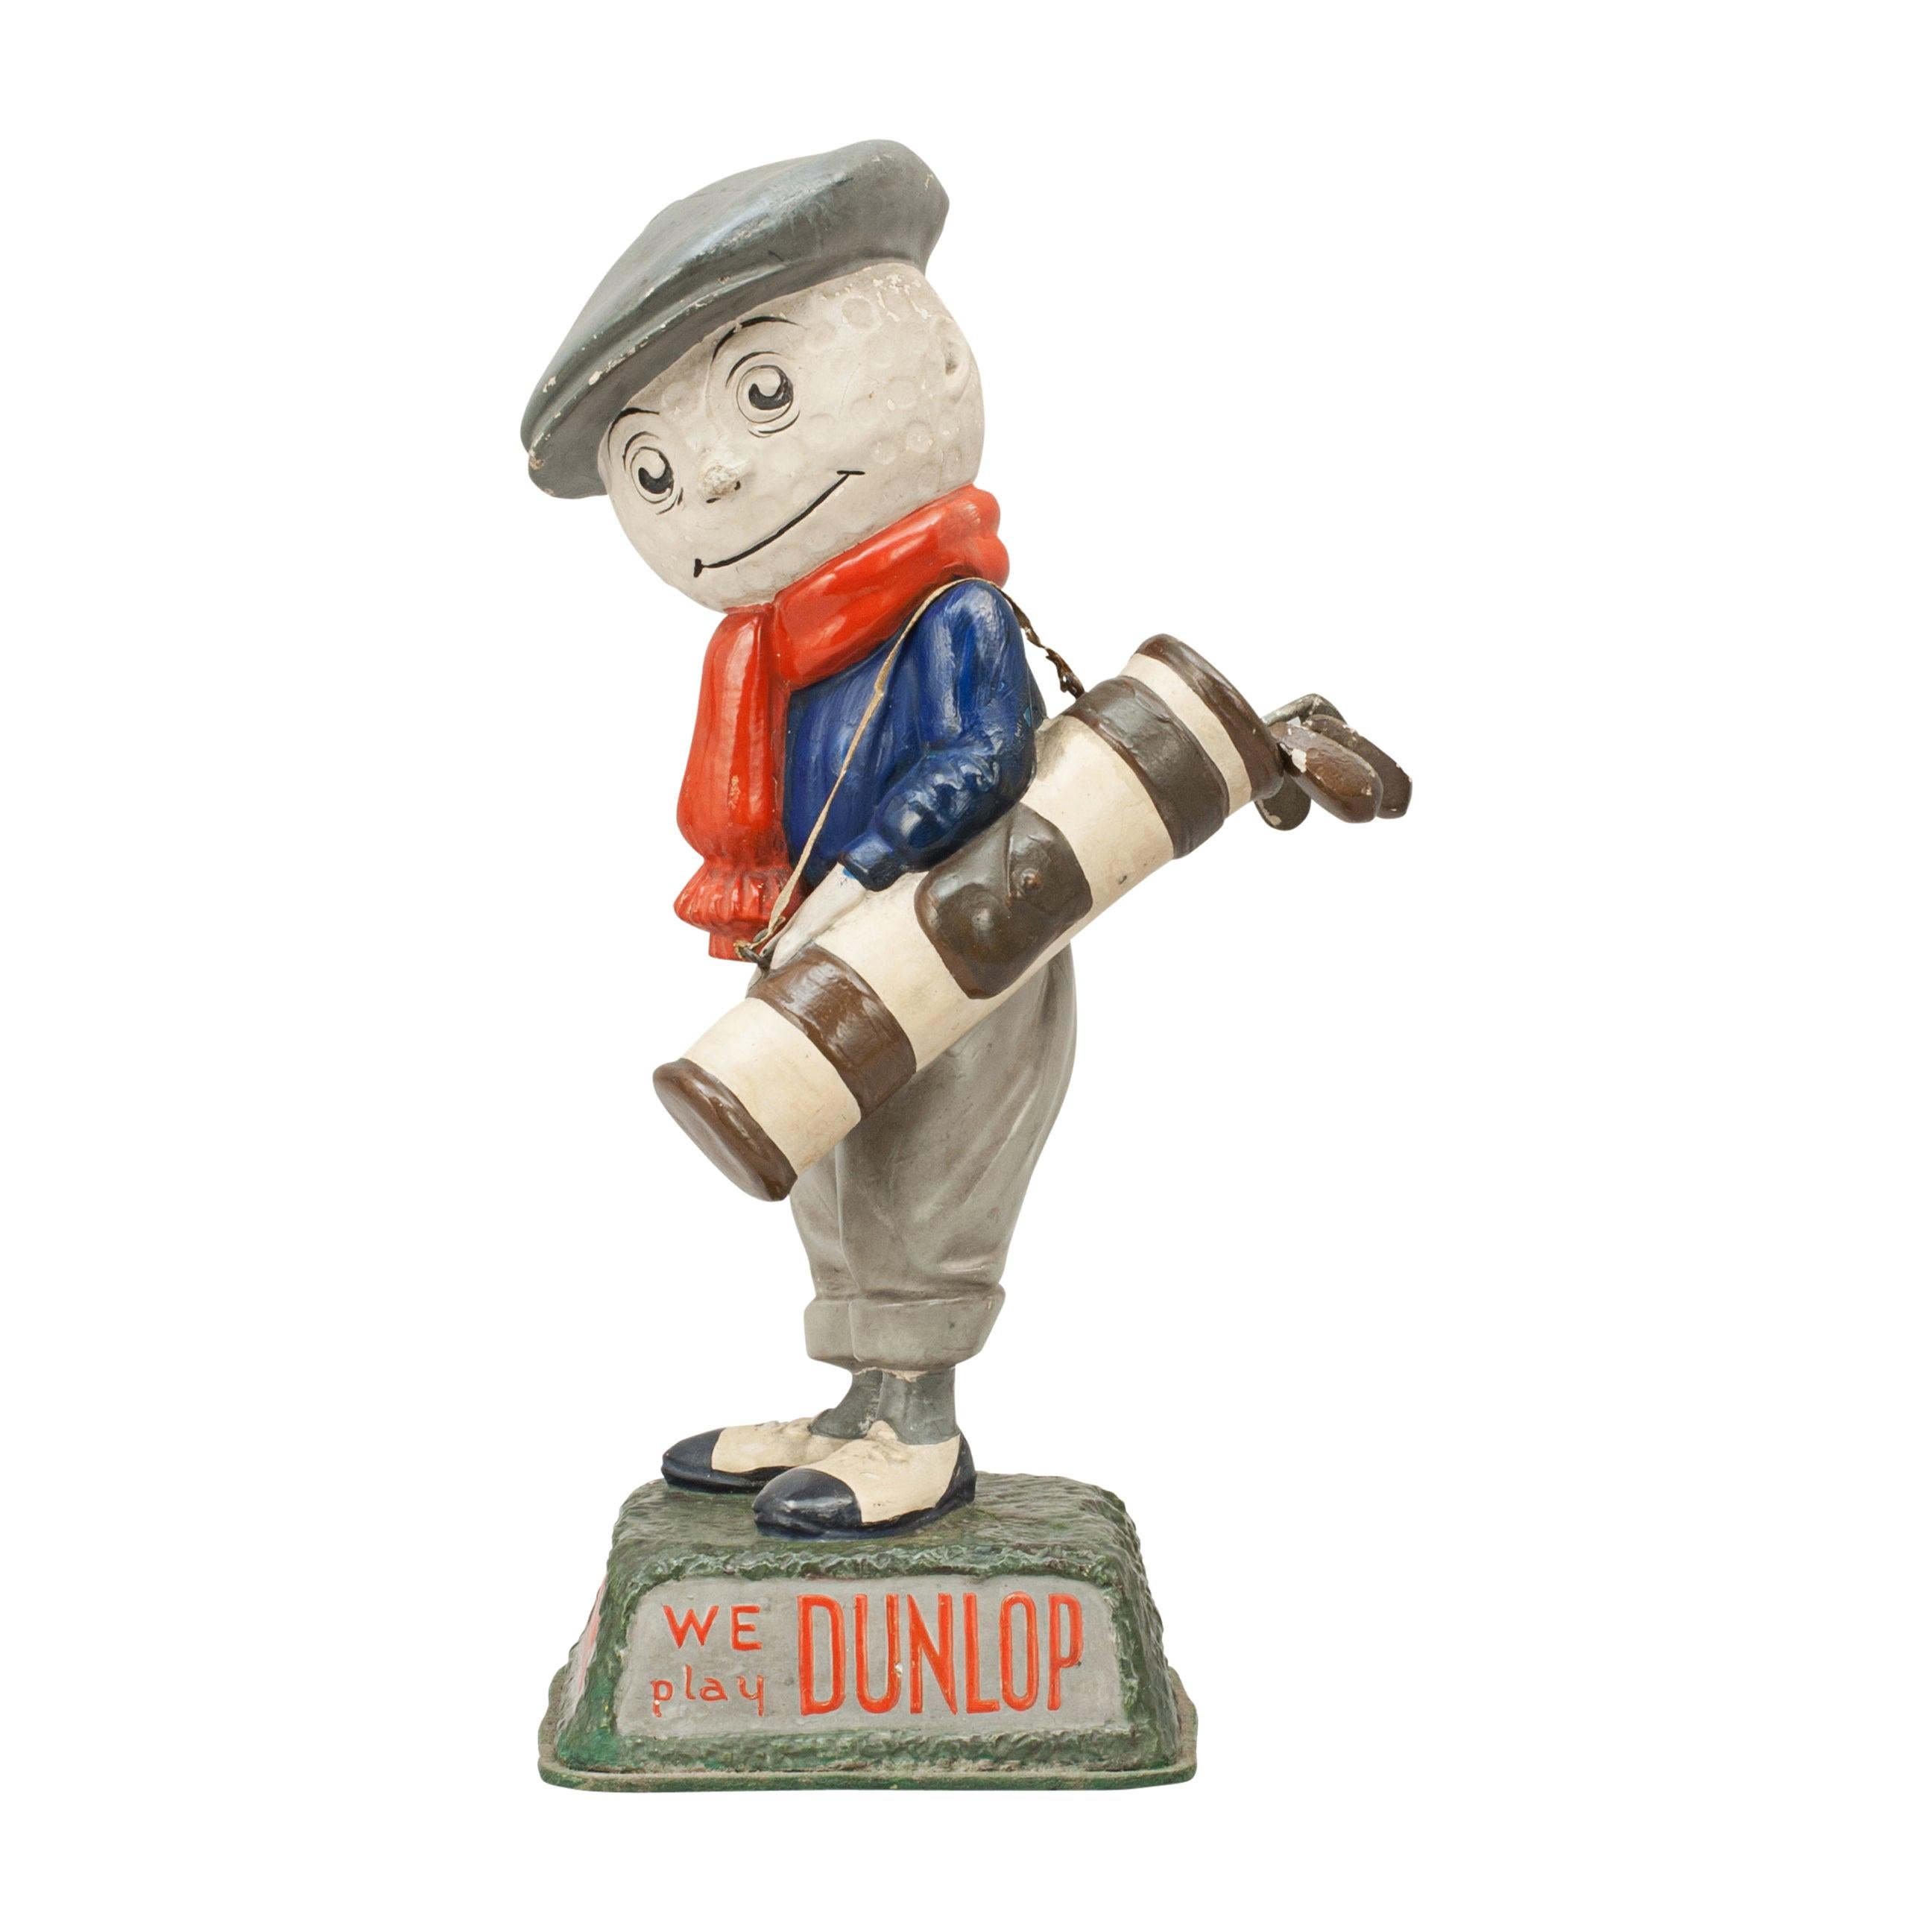 Antique Advertising Dunlop Man, Golf Figure, Point of Sale Advertising